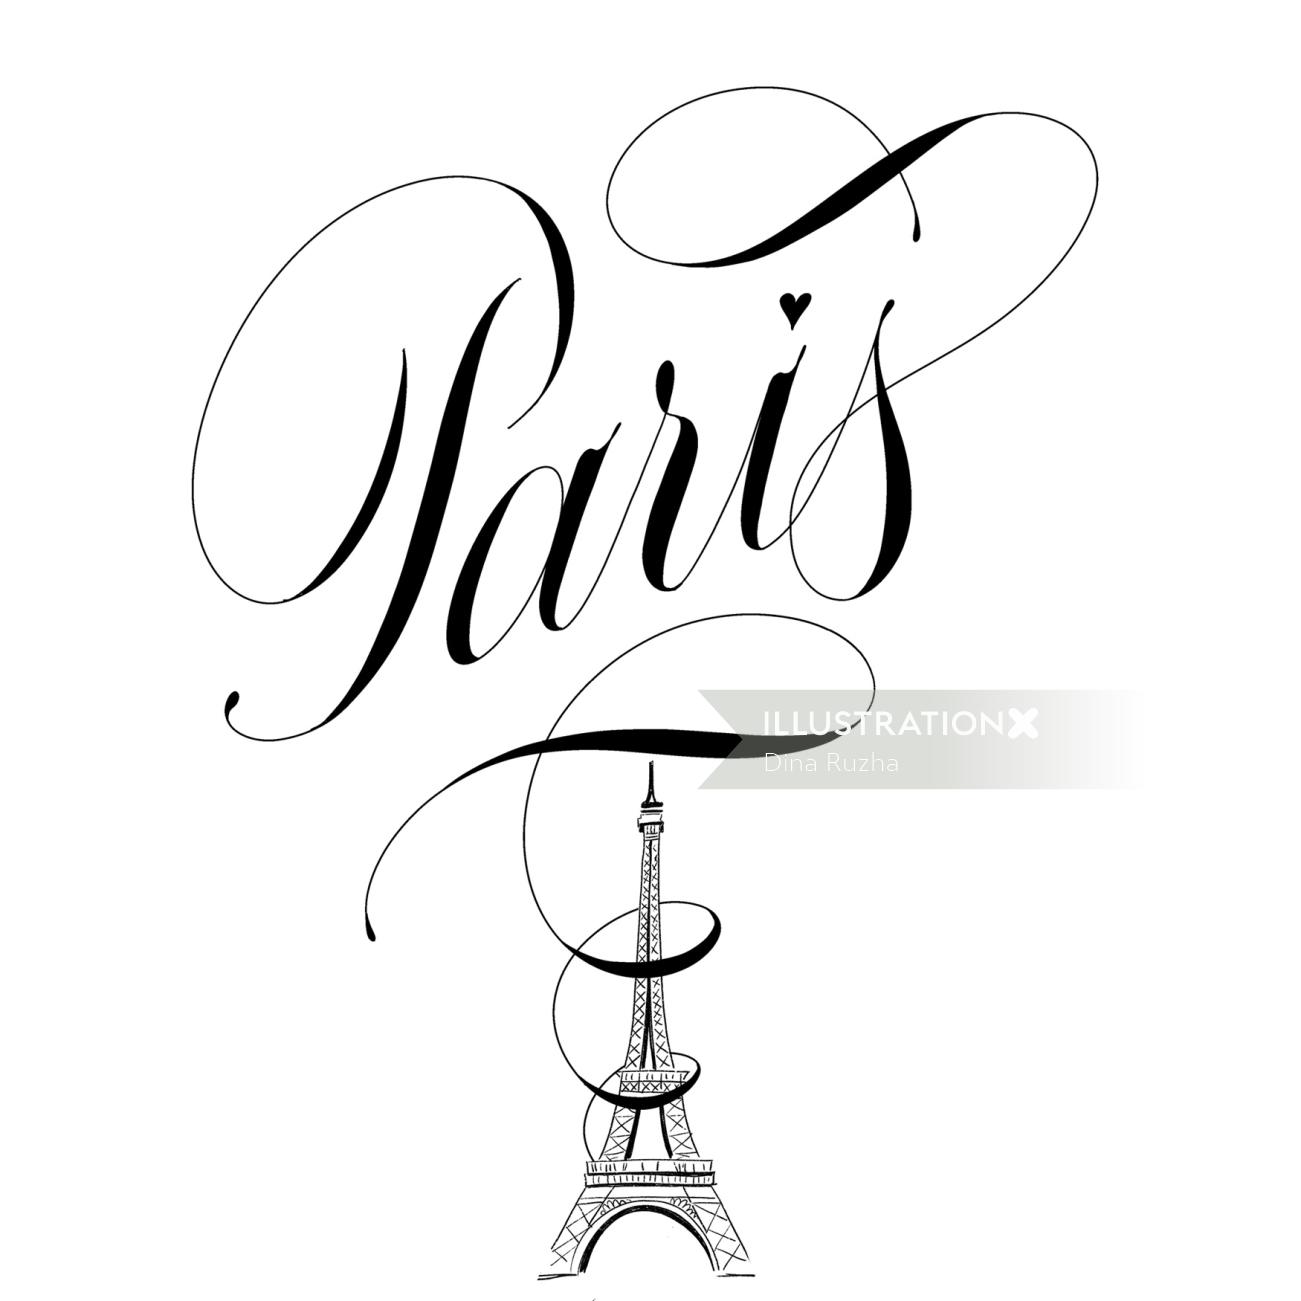 Paris skyline in elegant lettering